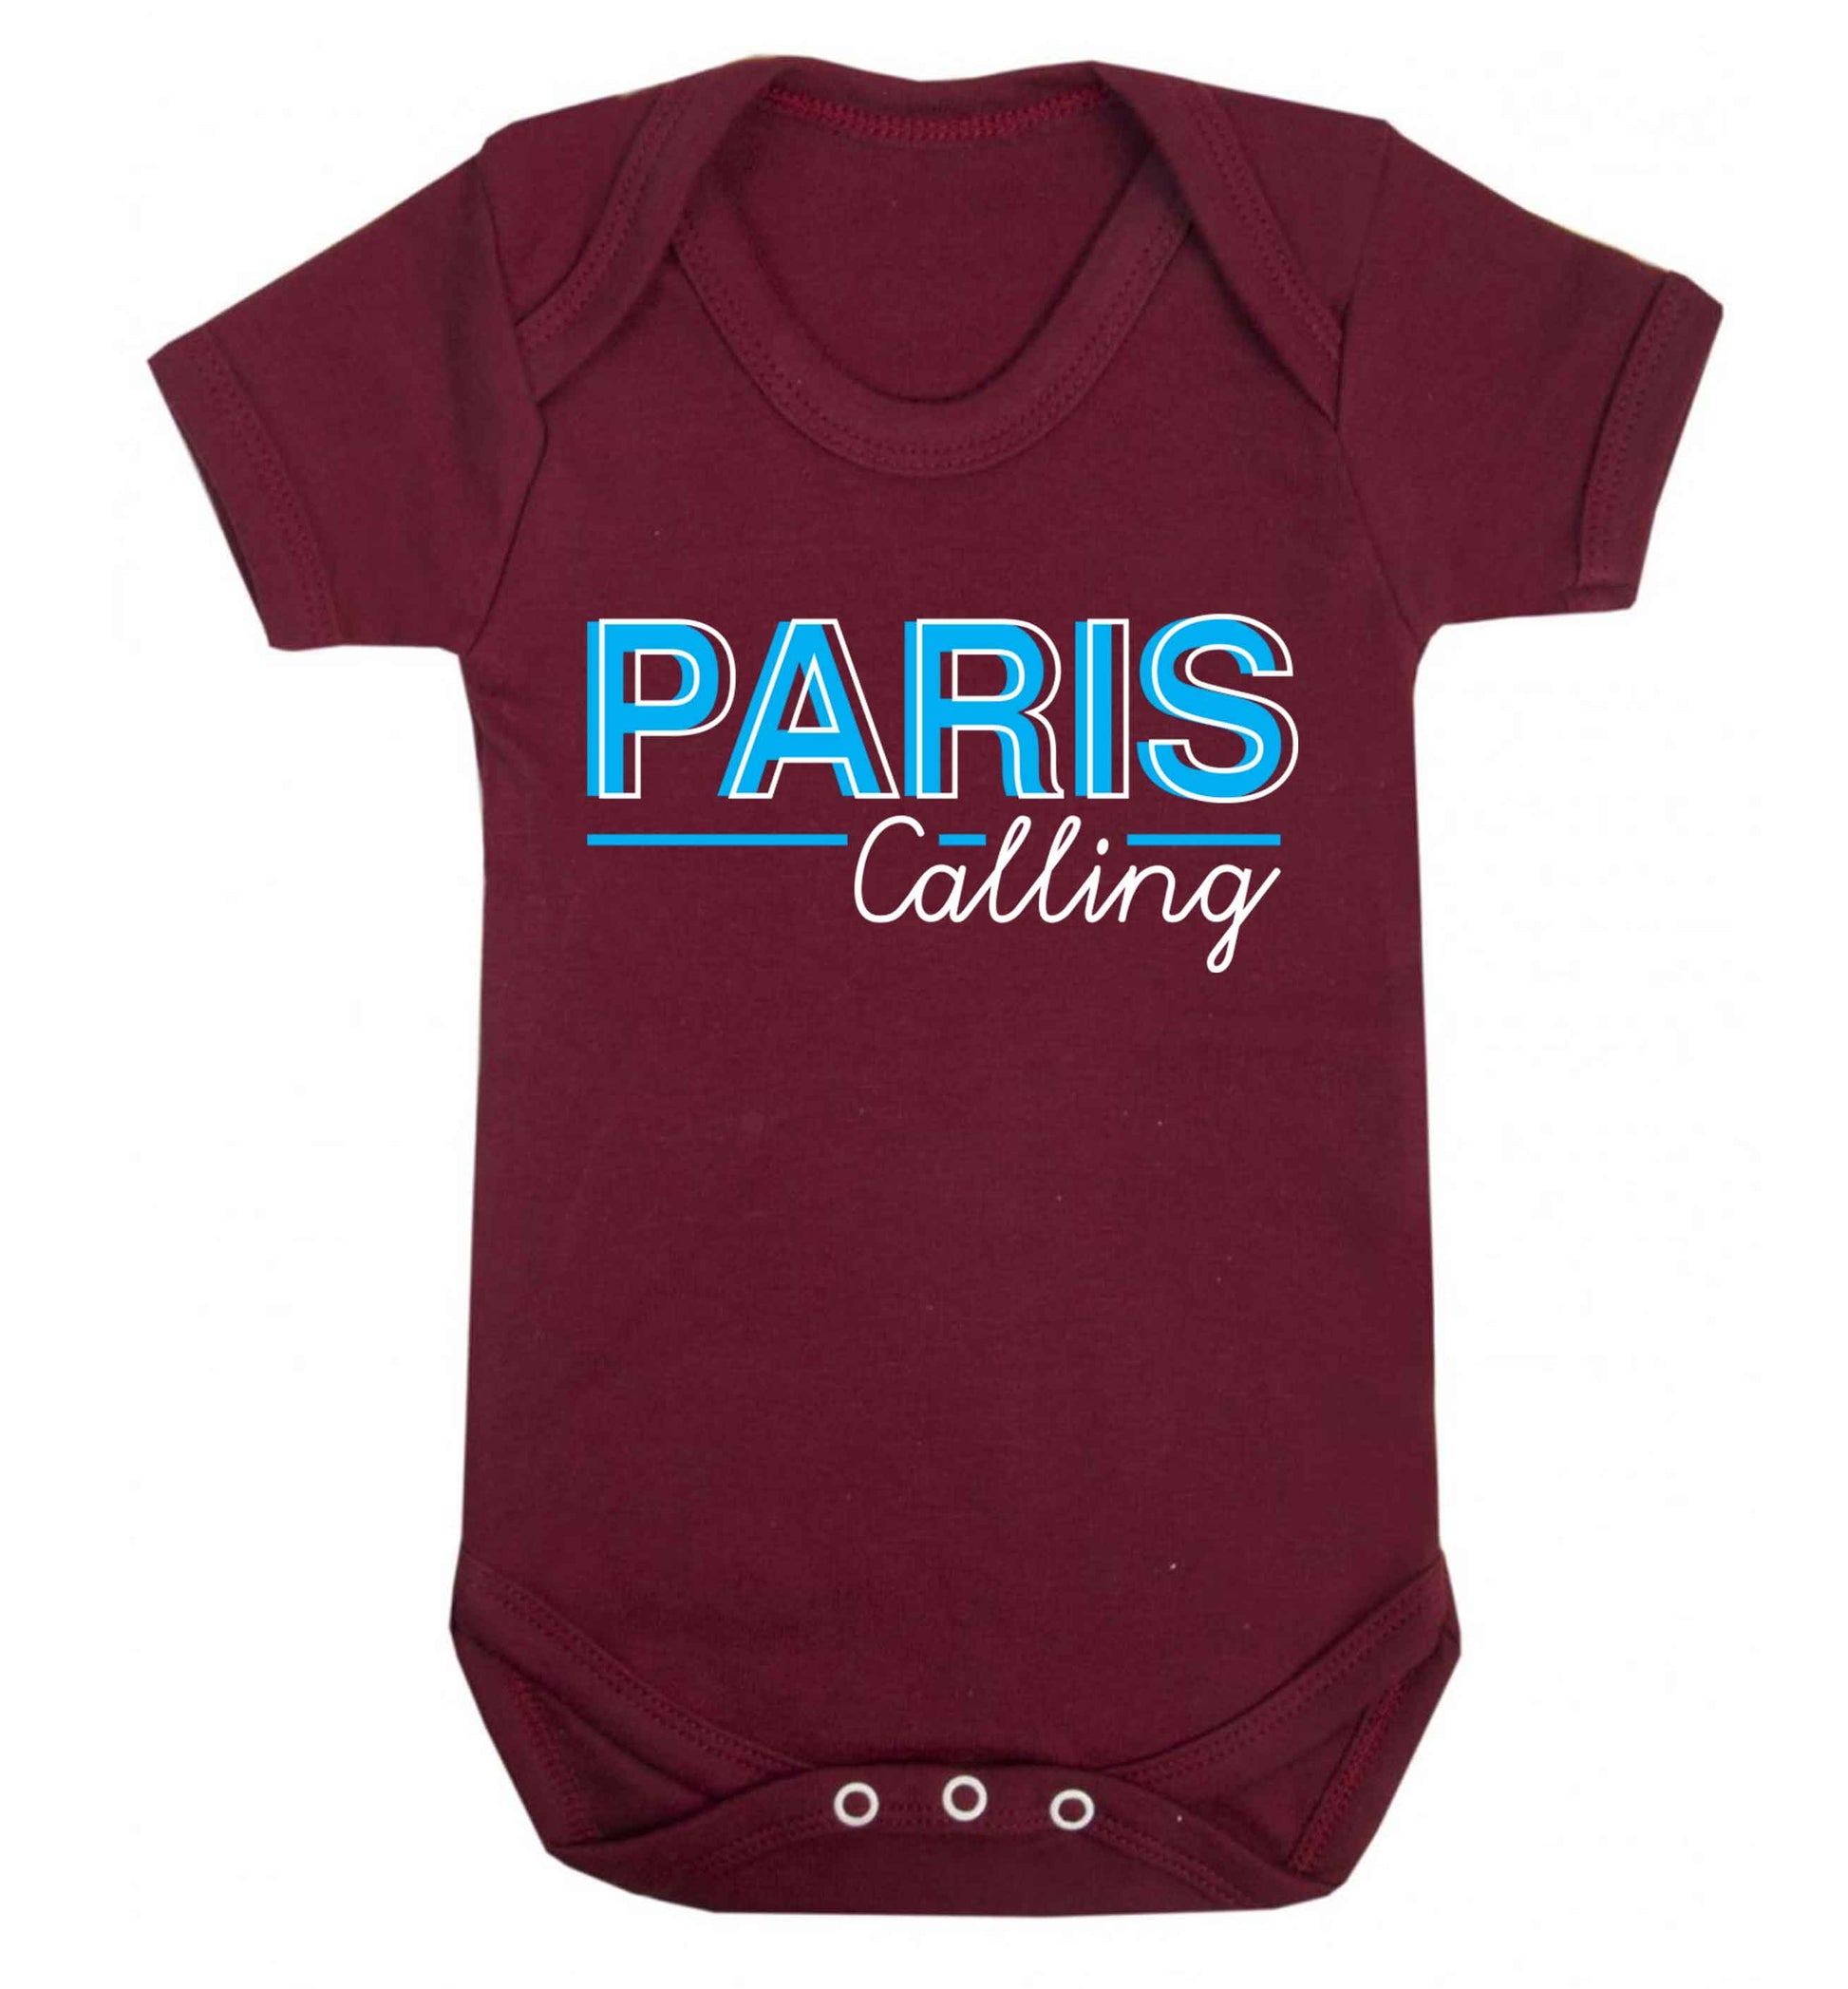 Paris calling Baby Vest maroon 18-24 months